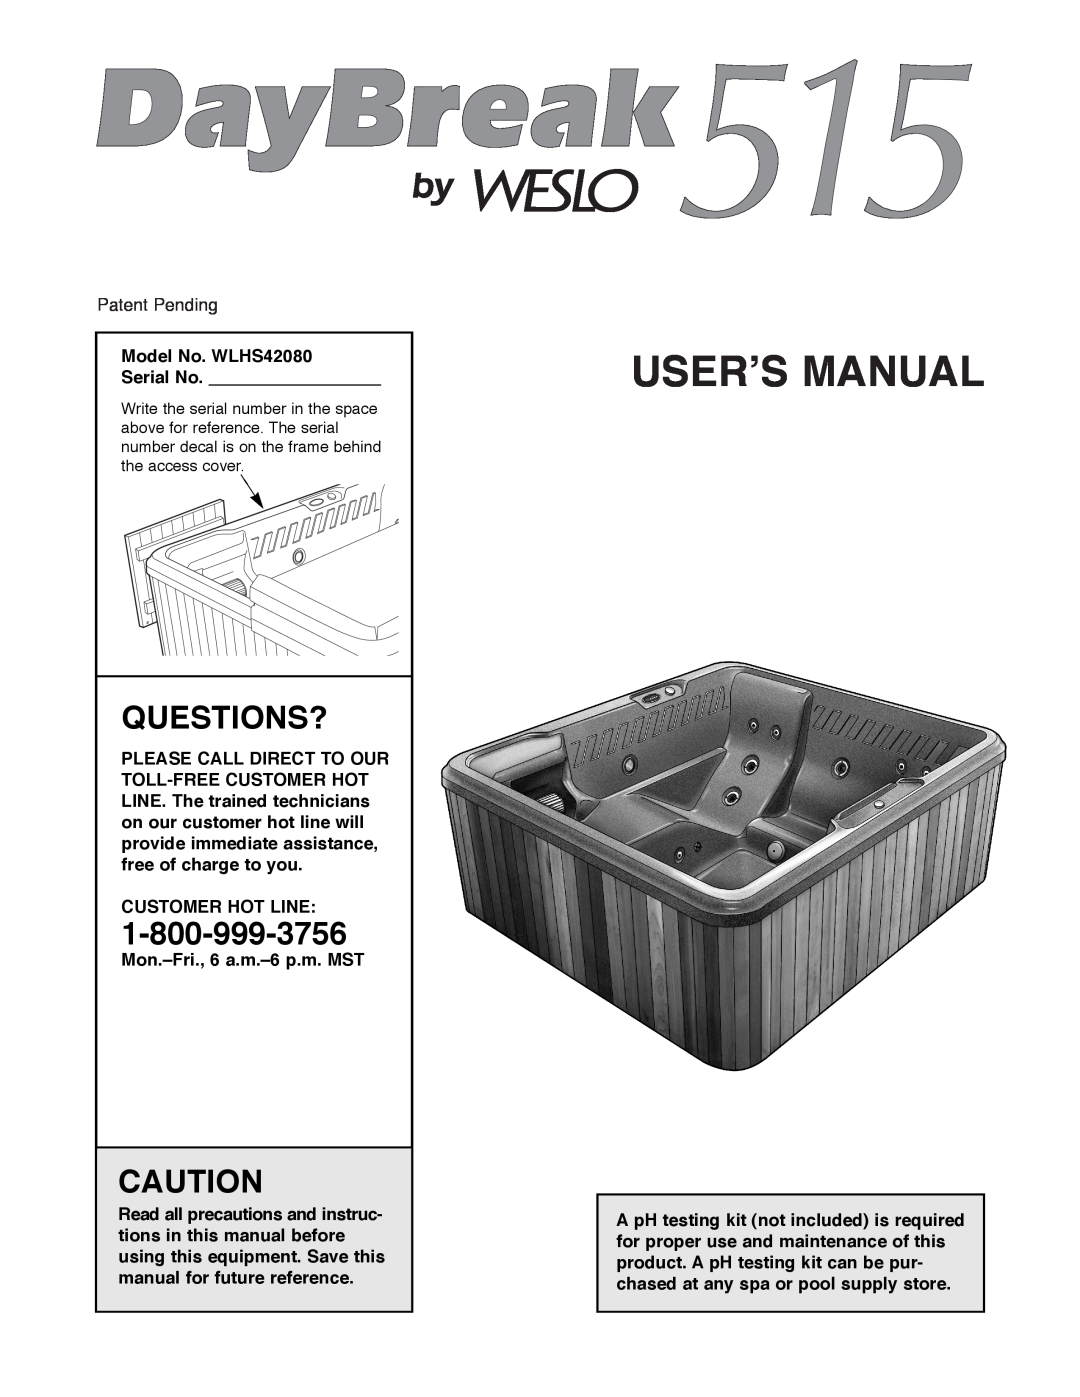 Weslo manual Questions?, Model No. WLHS42080 Serial No, Customer Hot Line, Mon.ÐFri., 6 a.m.Ð6 p.m. MST, Userõs Manual 